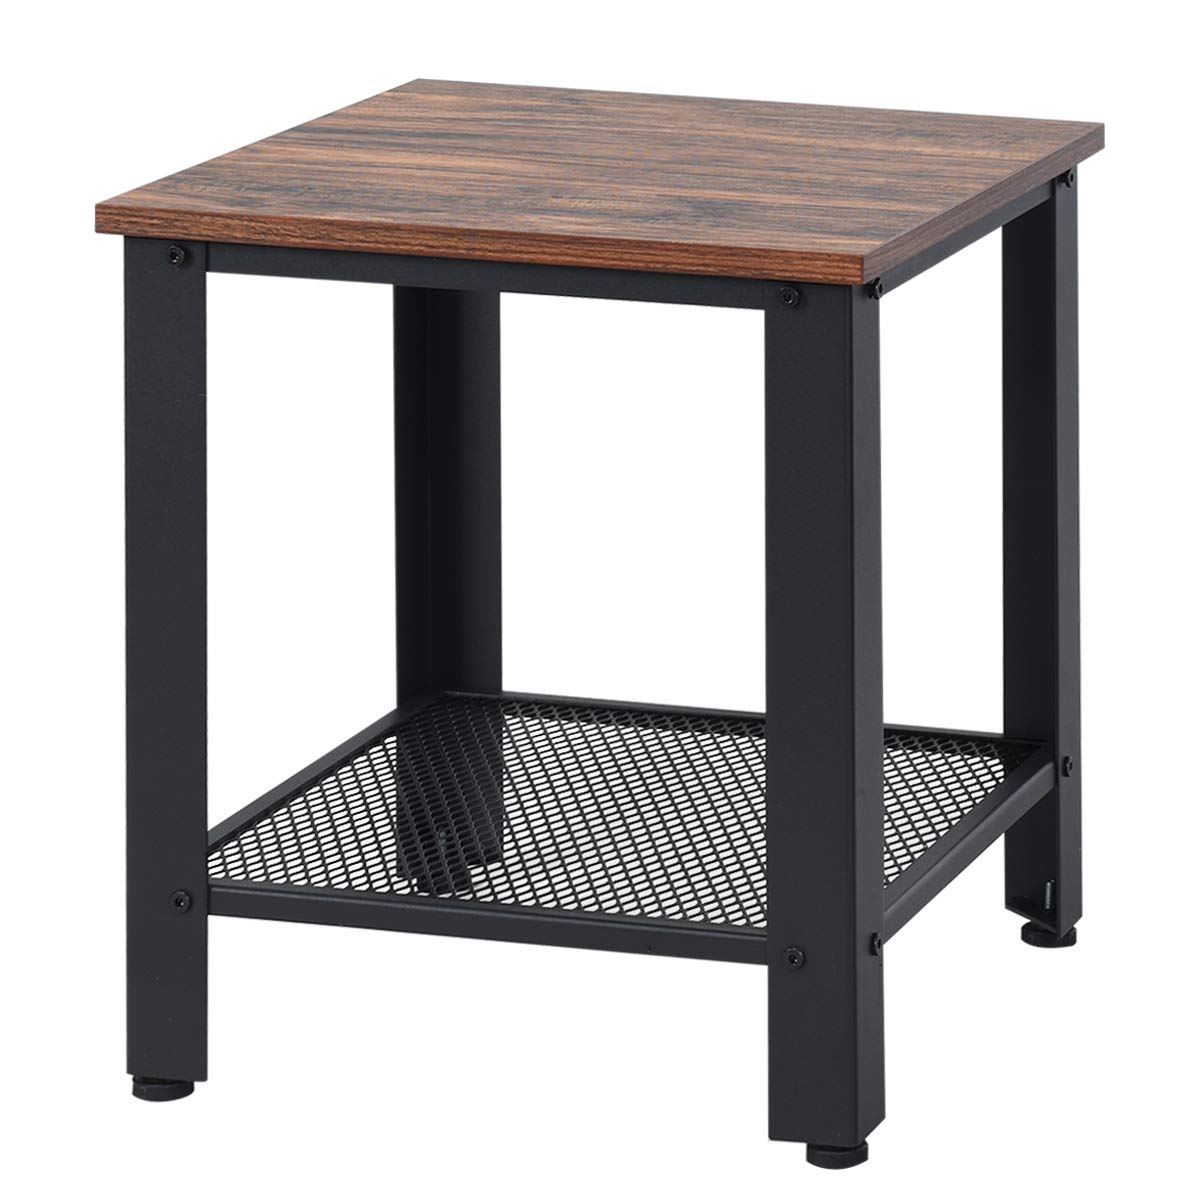 Giantex Nightstand Side Table 2-Tier W/Adjustable Feet, Storage Shelf and Metal Frame